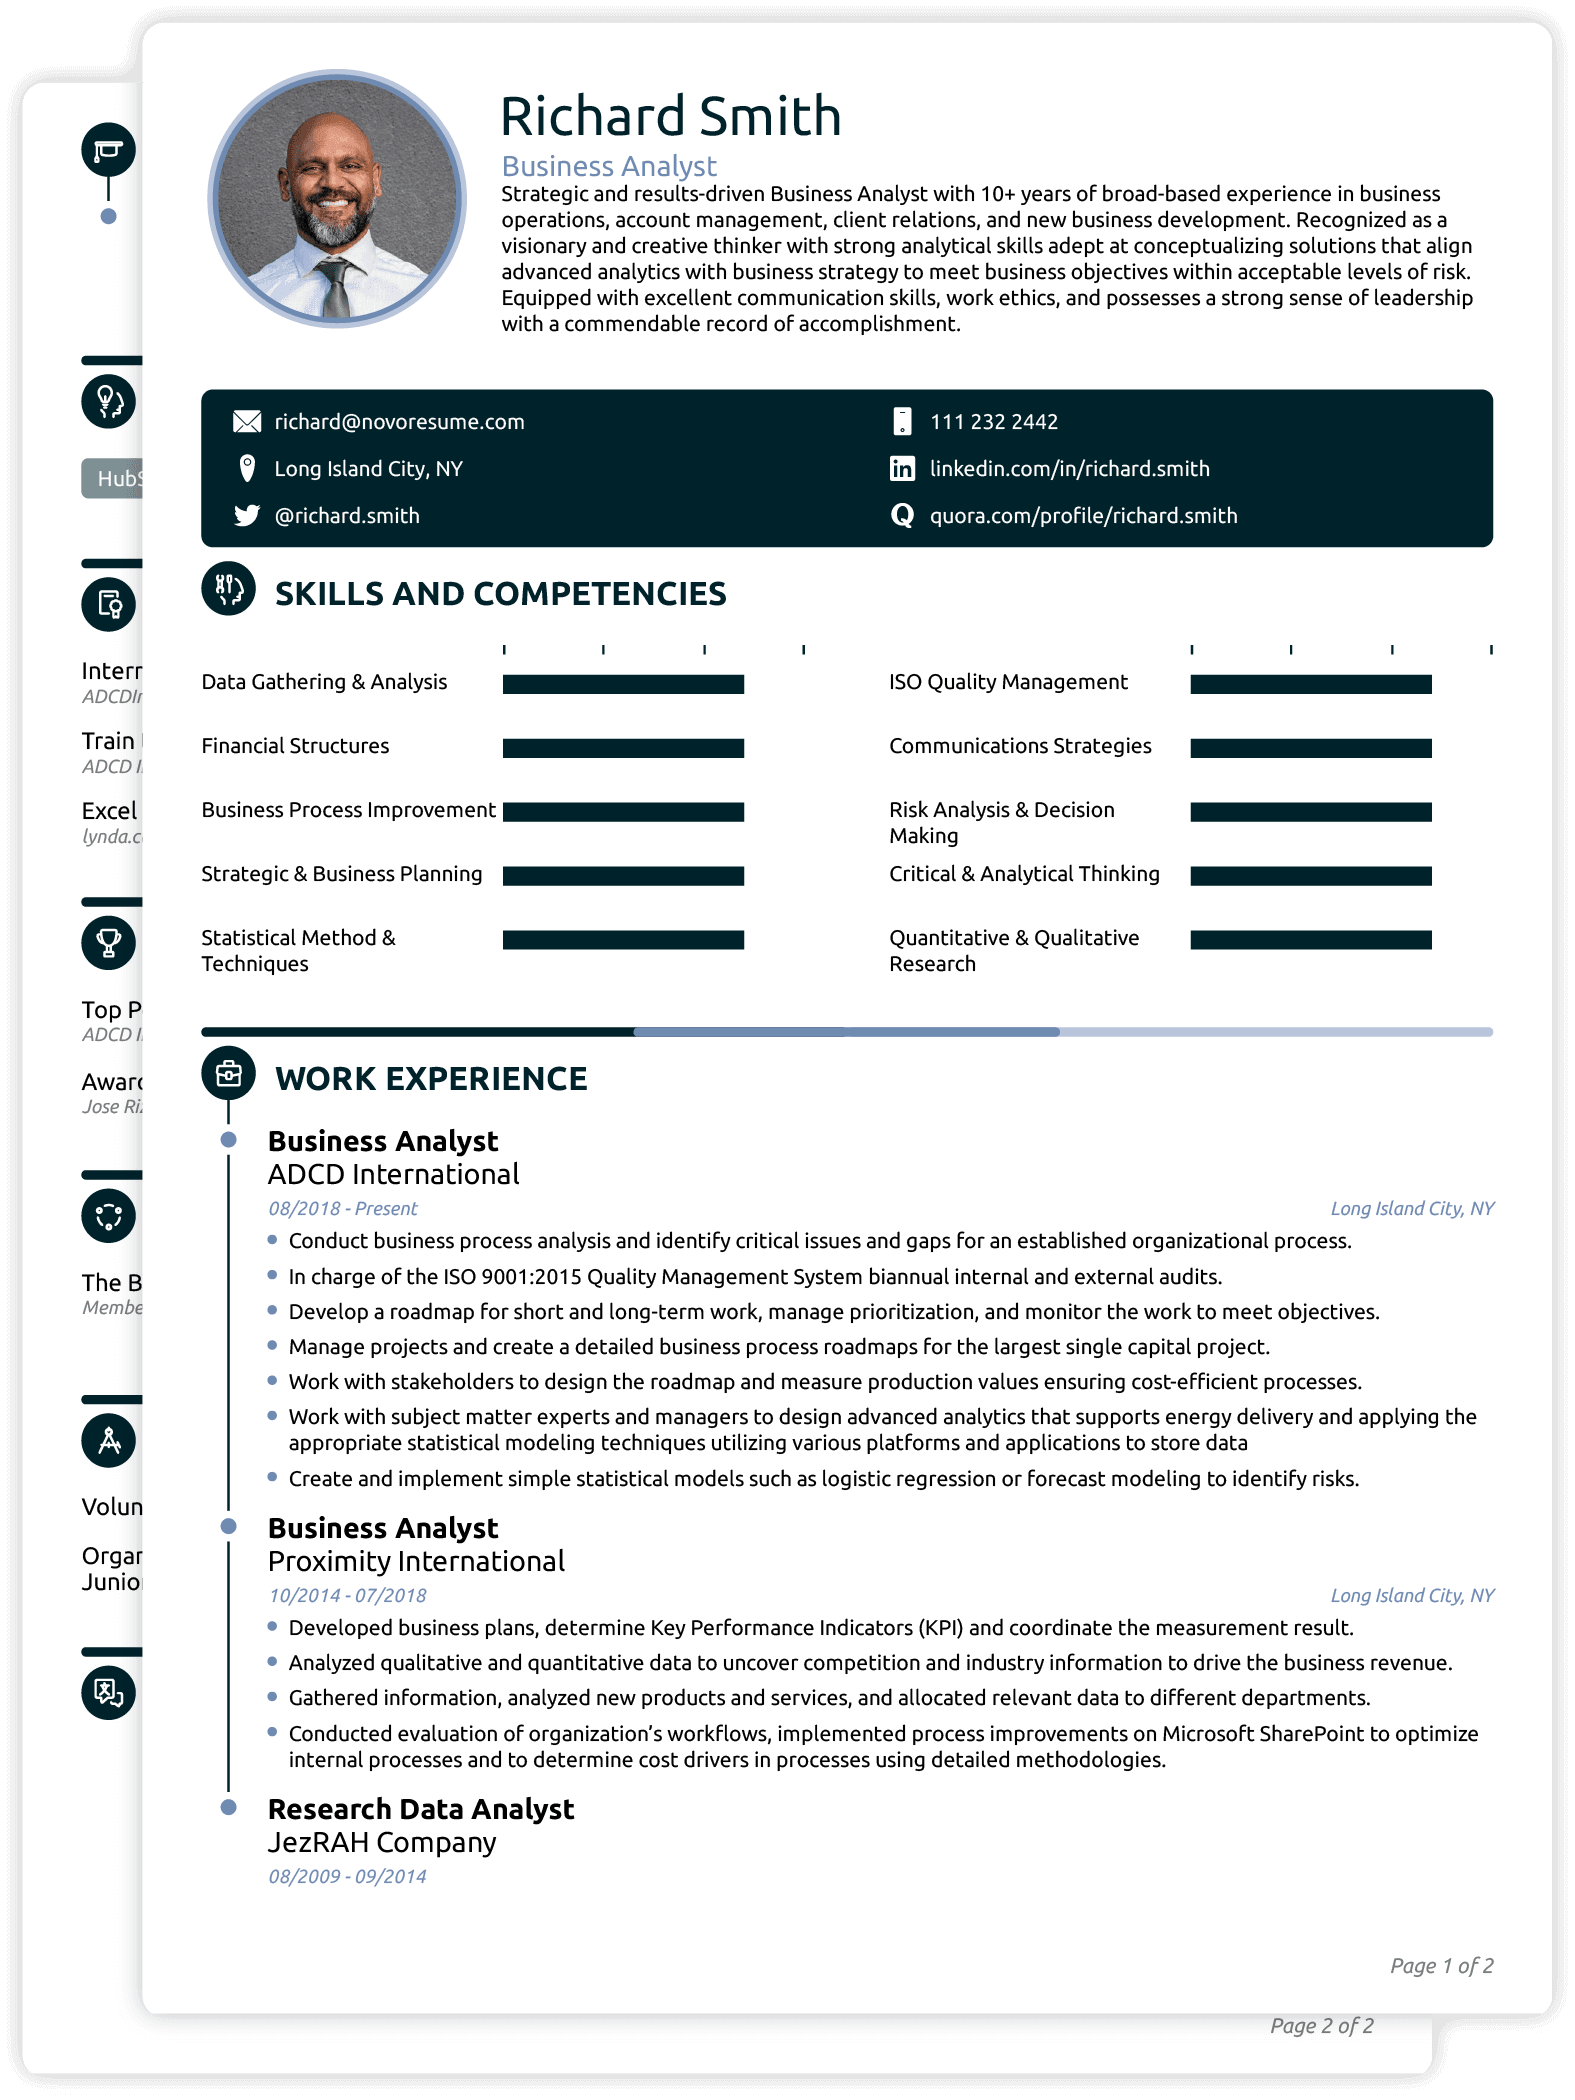 Skill-Based CV Template